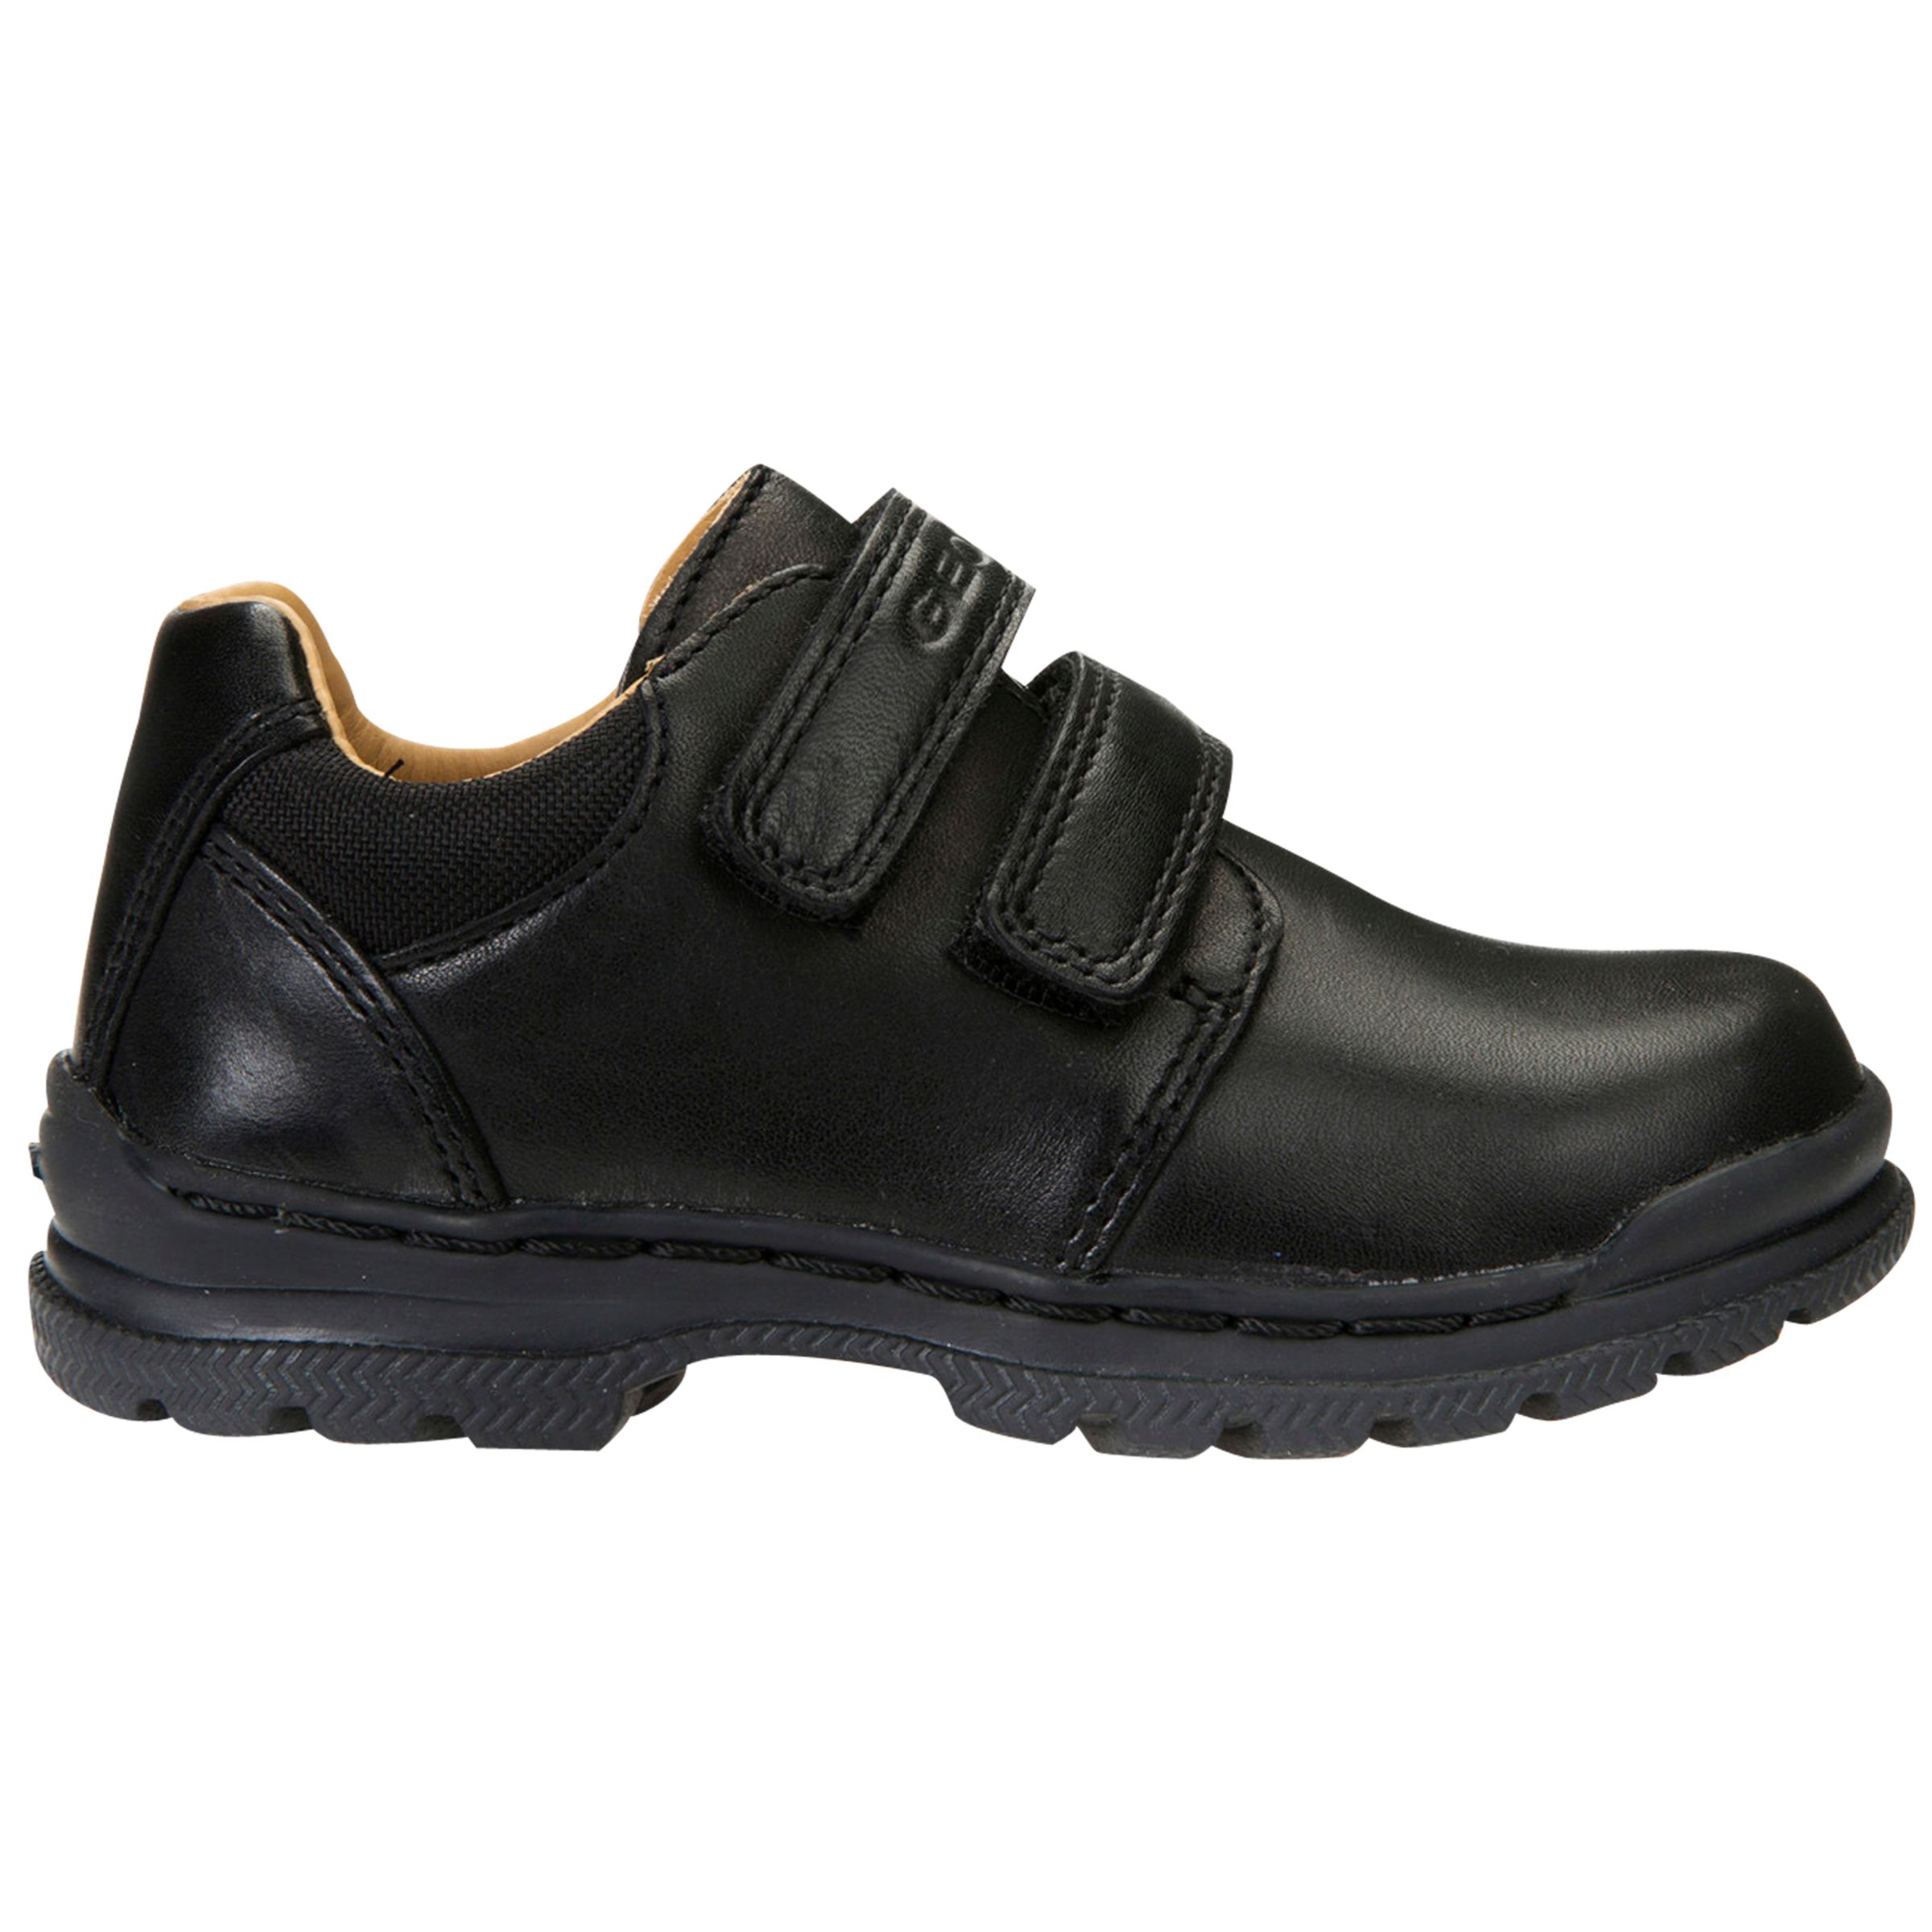 Geox Children's JR William School Shoes, Black